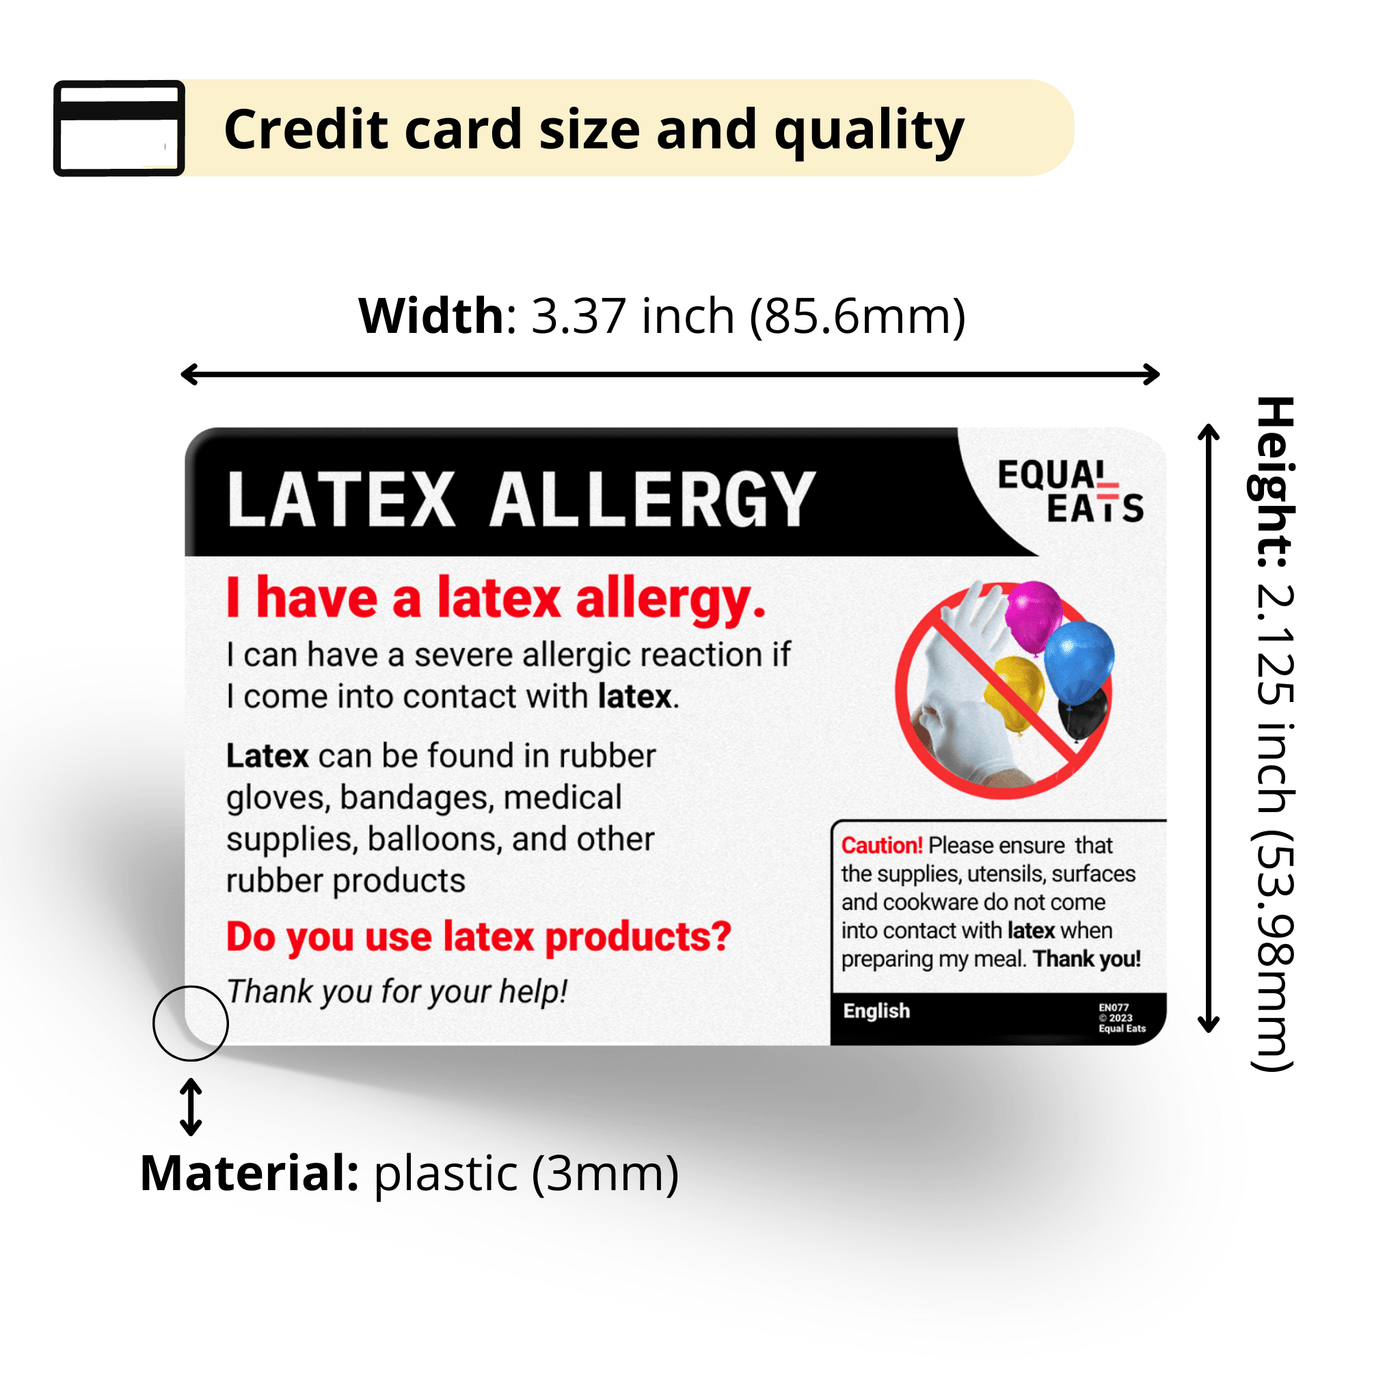 Portuguese (Brazil) Latex Allergy Card